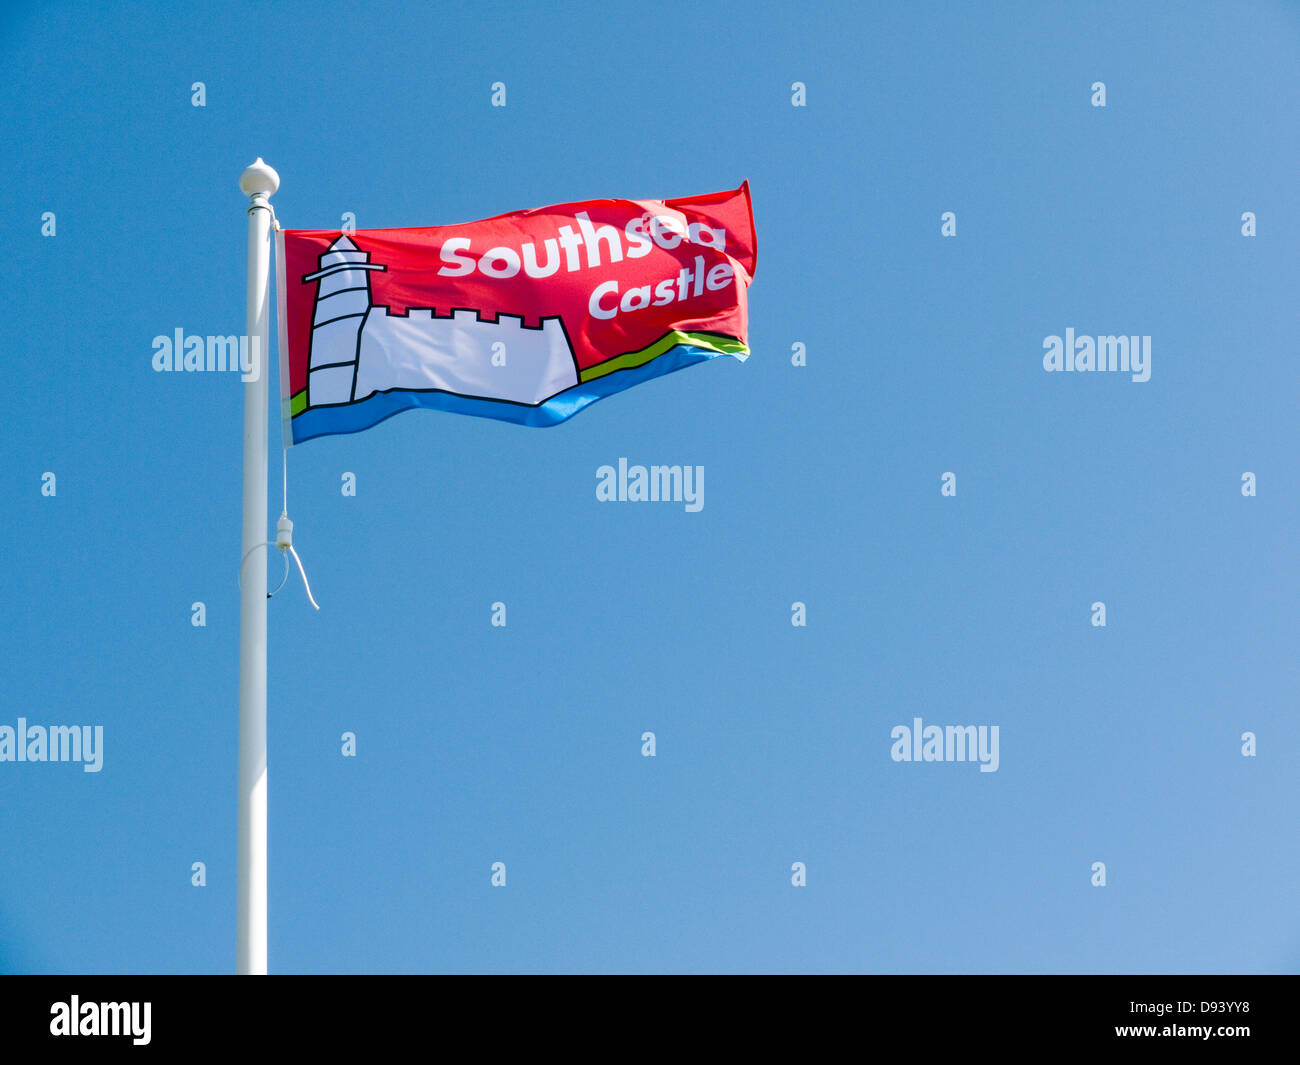 southsea castle flag flying against a bright blue sky Stock Photo